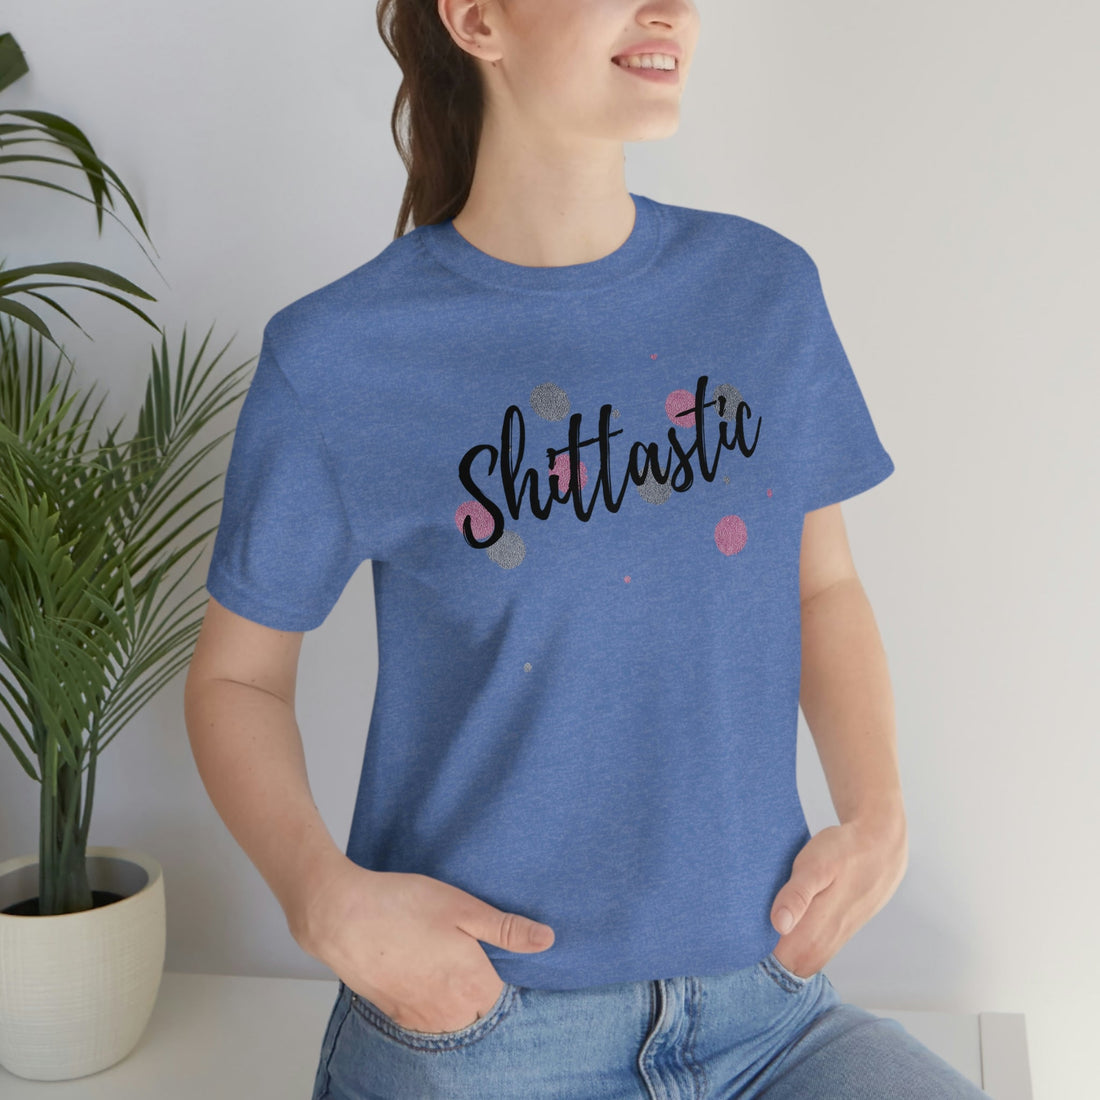 S!36%tatstic - T-Shirt - Positively Sassy - S!36%tatstic